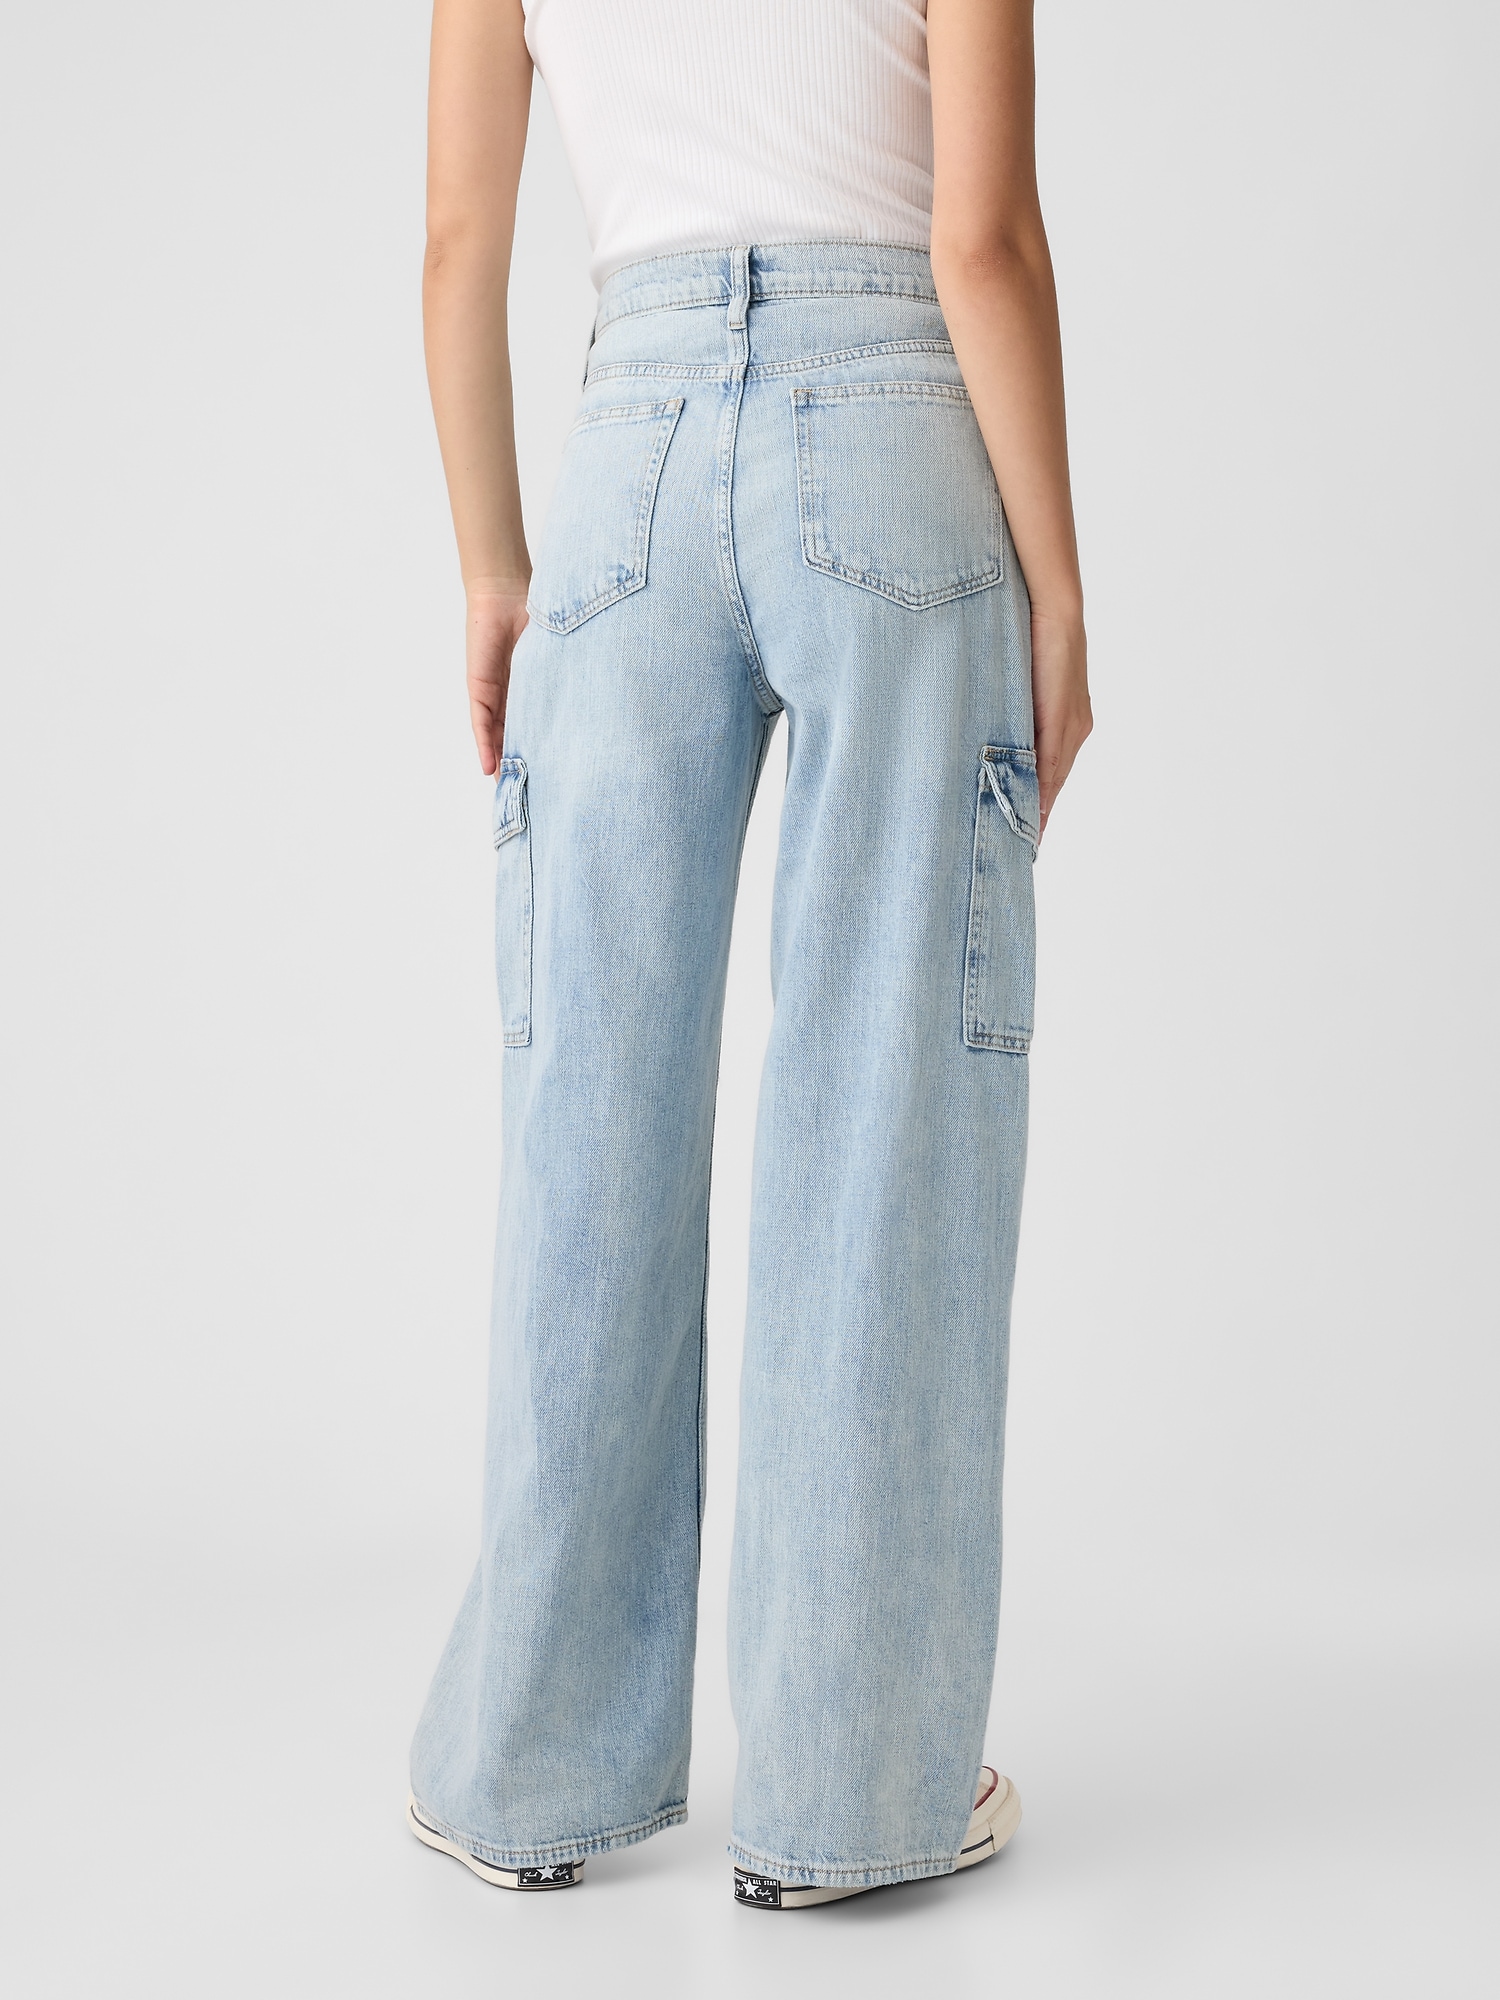 High Loose Women's Jeans - Medium Wash